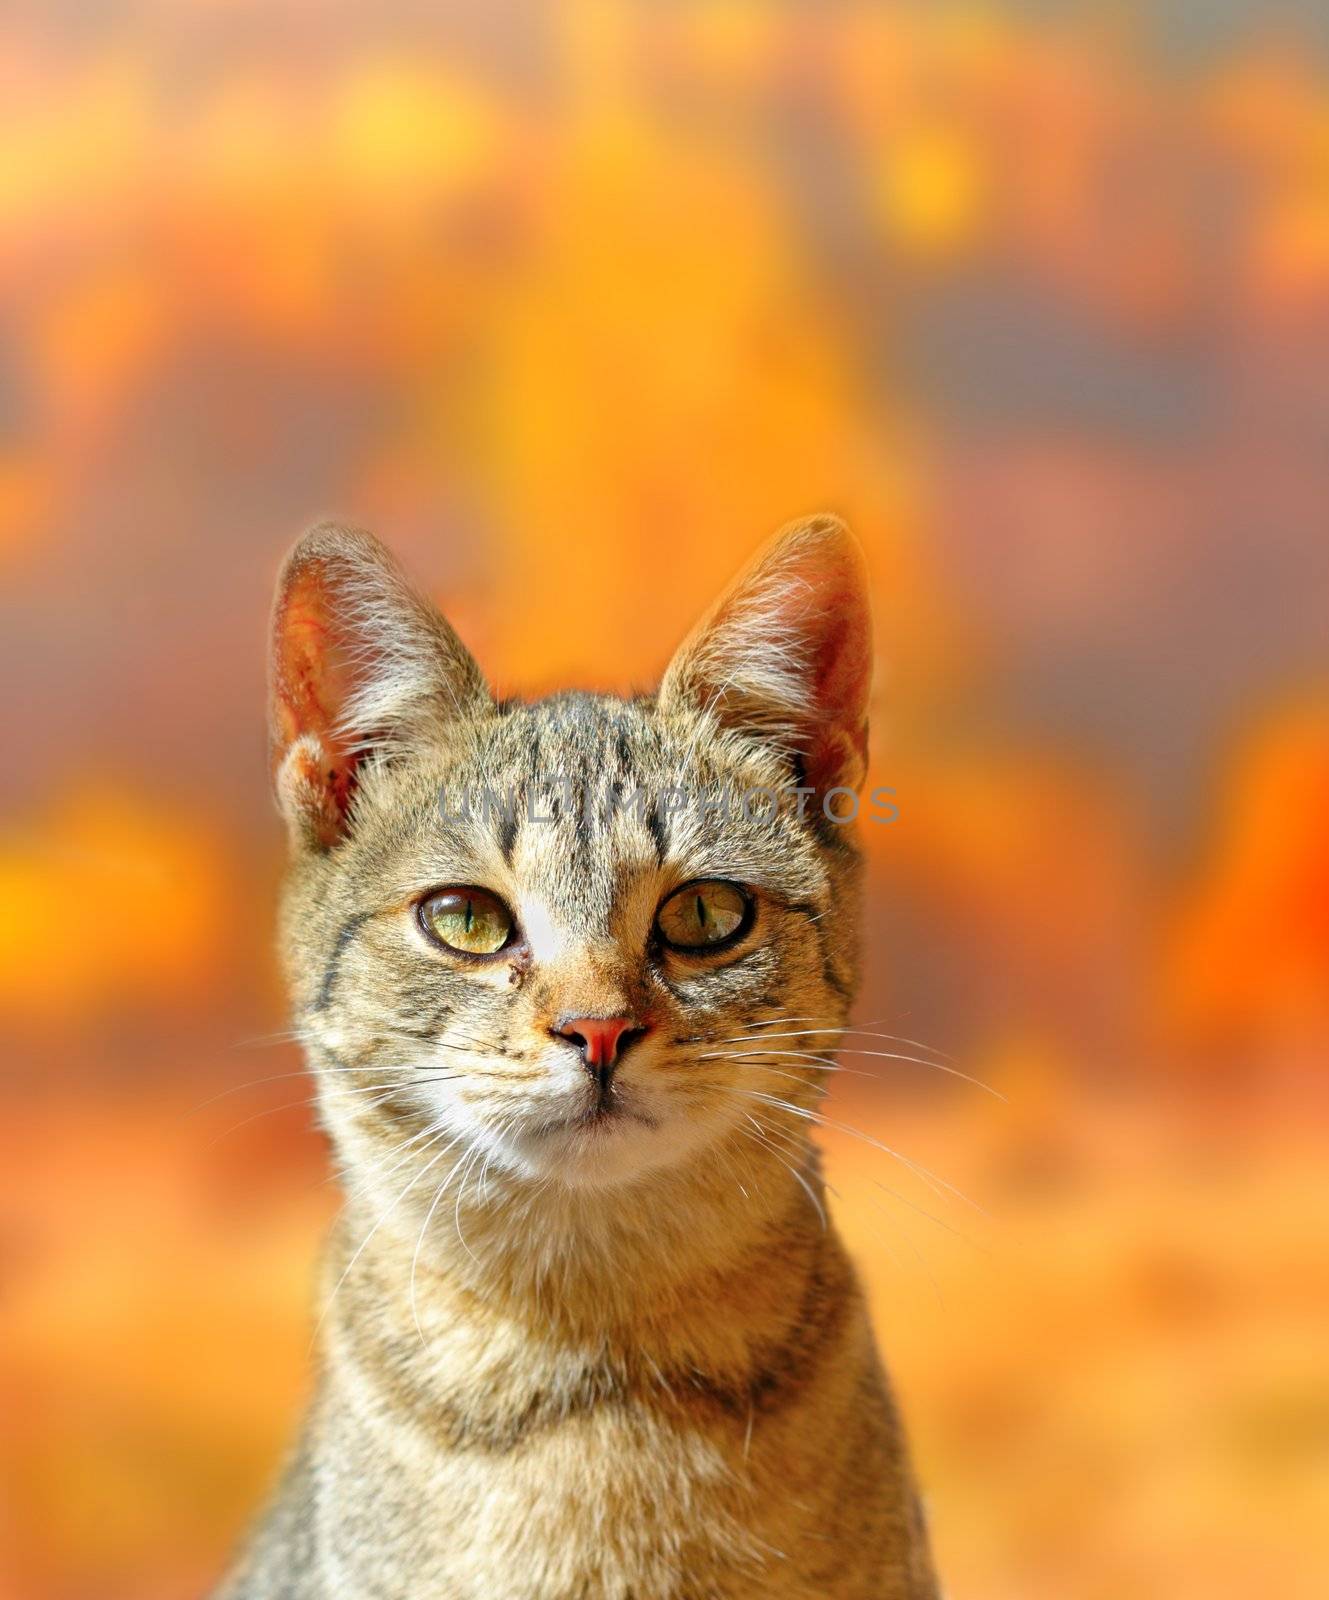 cat portrait over autumn colors background by taviphoto